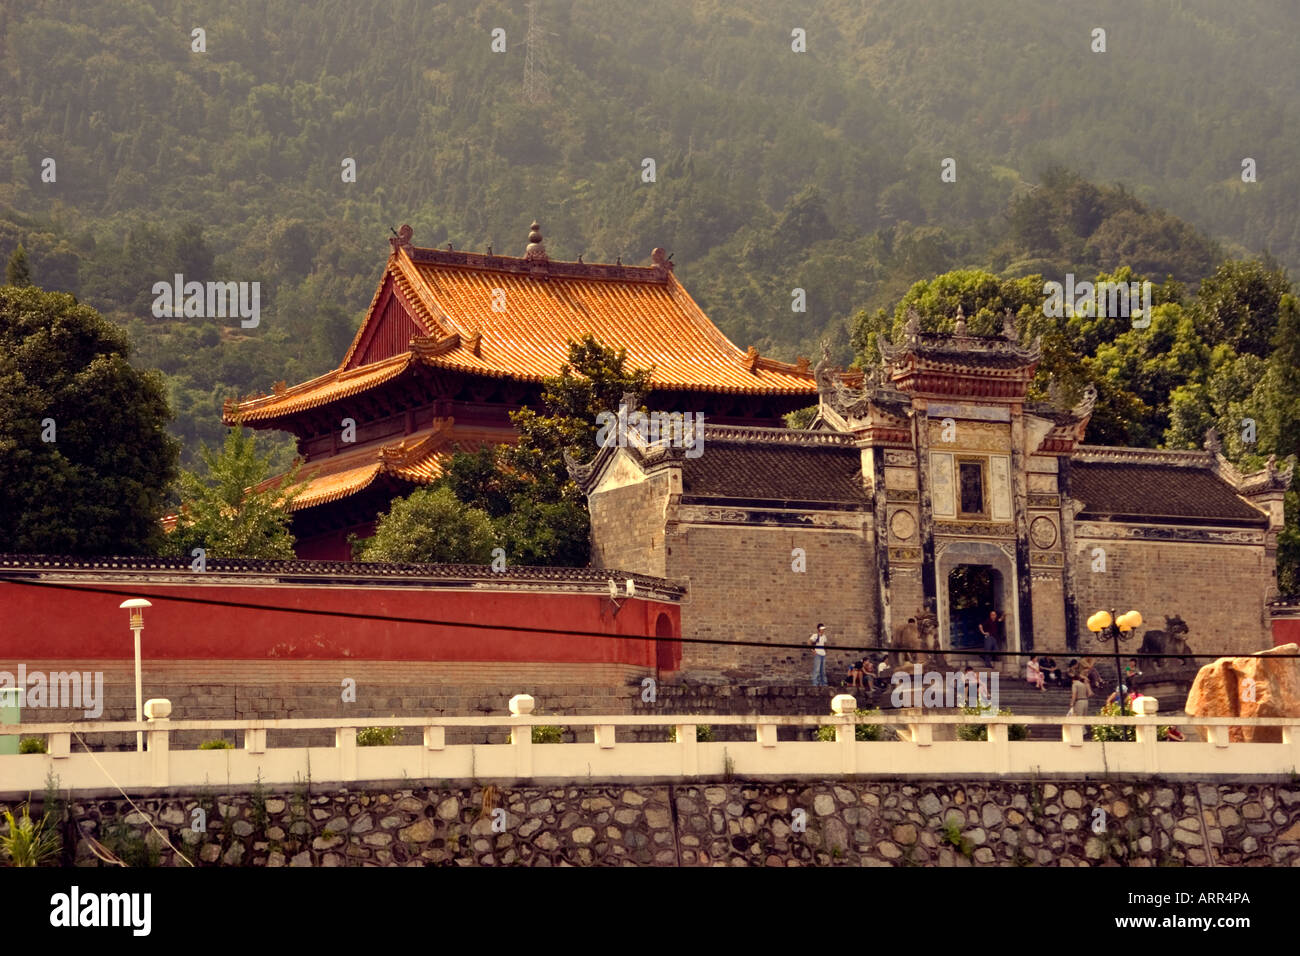 Temple at Sandouping on the Yangzi River Stock Photo